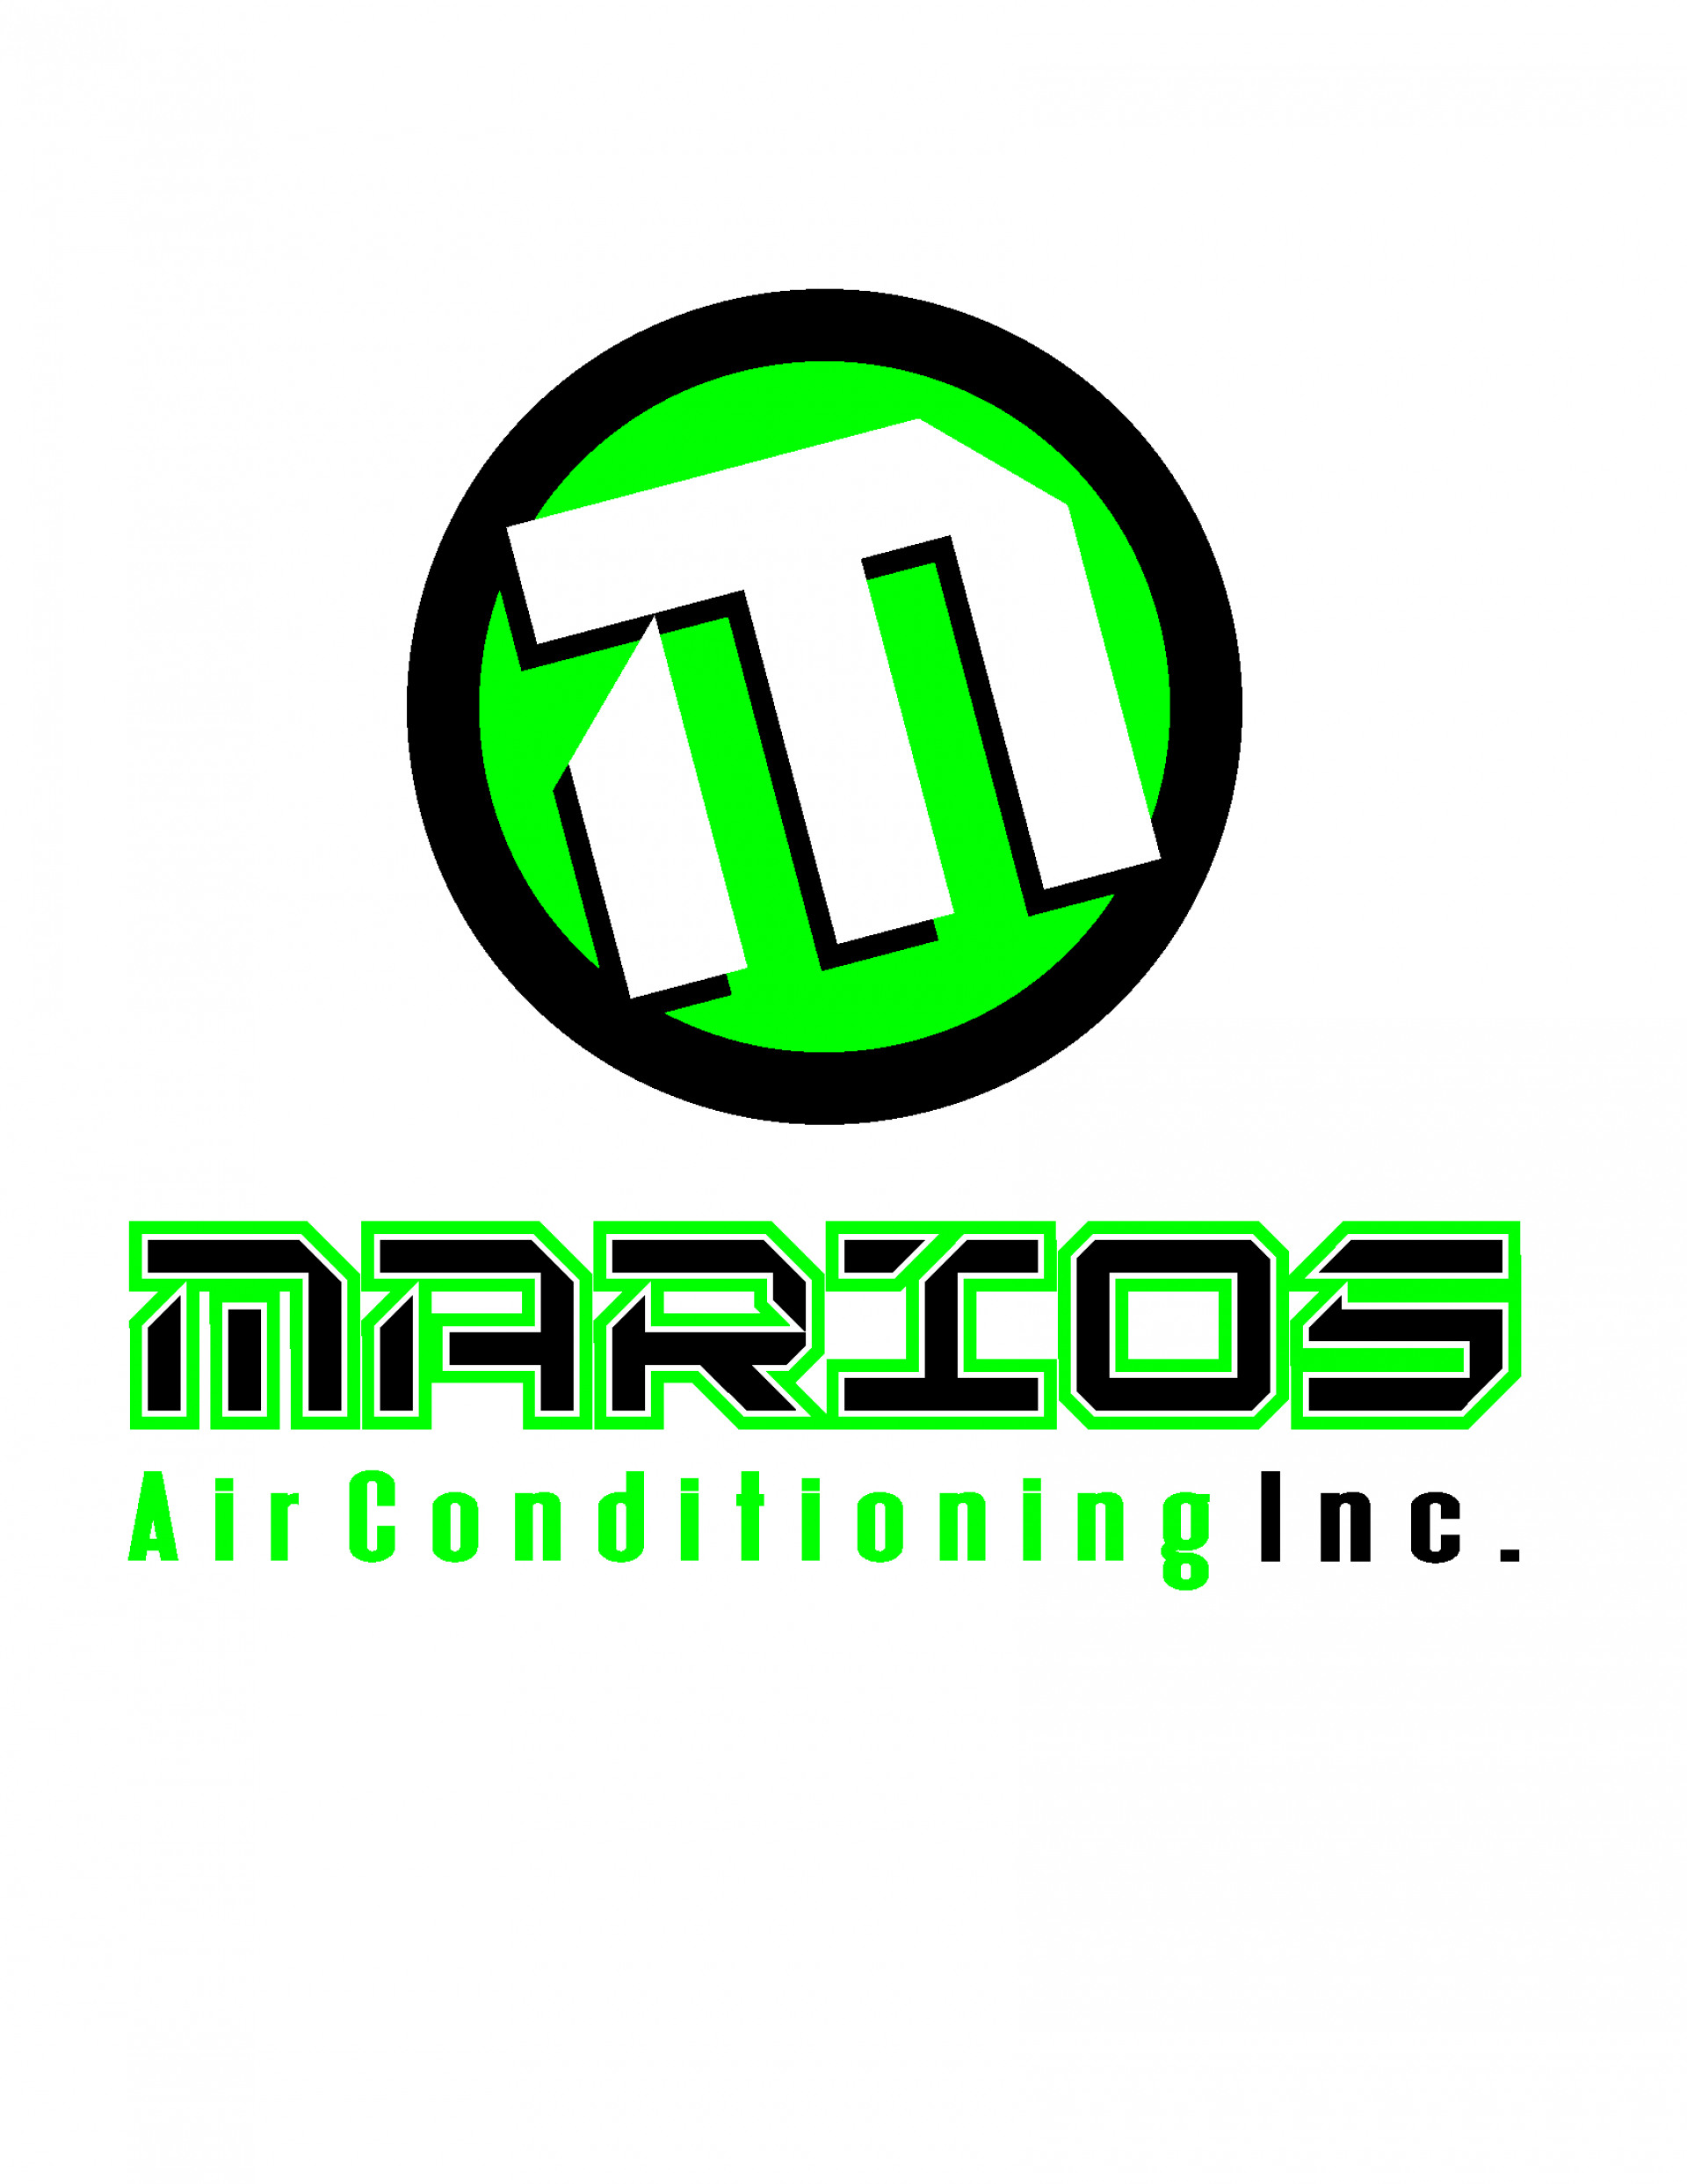 Marios Air Conditioning Inc. company logo